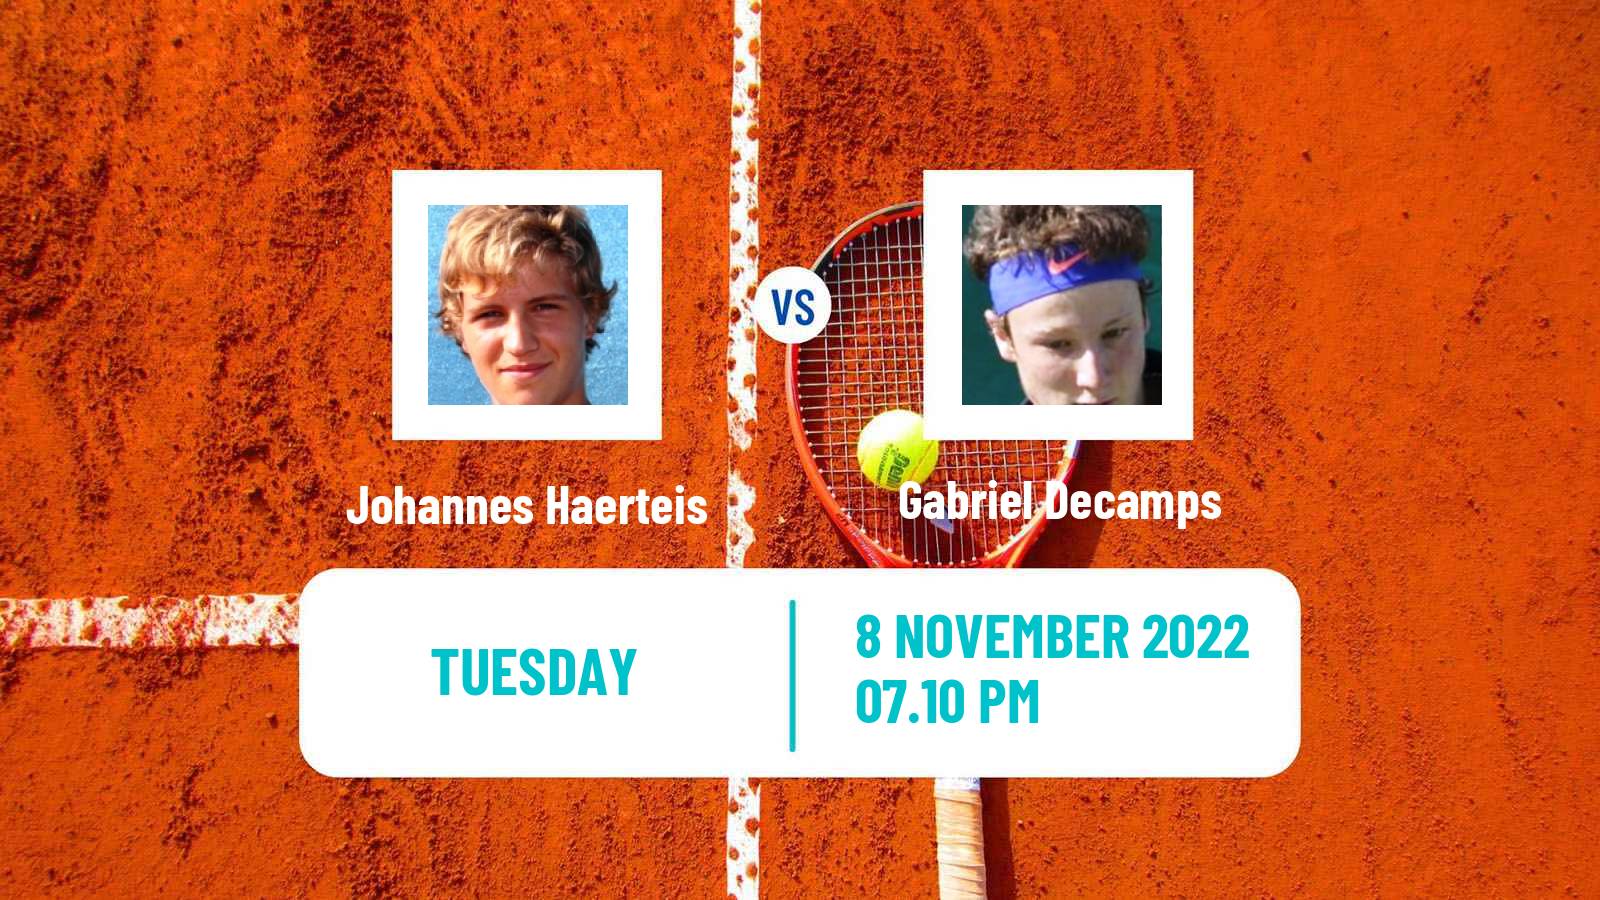 Tennis ATP Challenger Johannes Haerteis - Gabriel Decamps